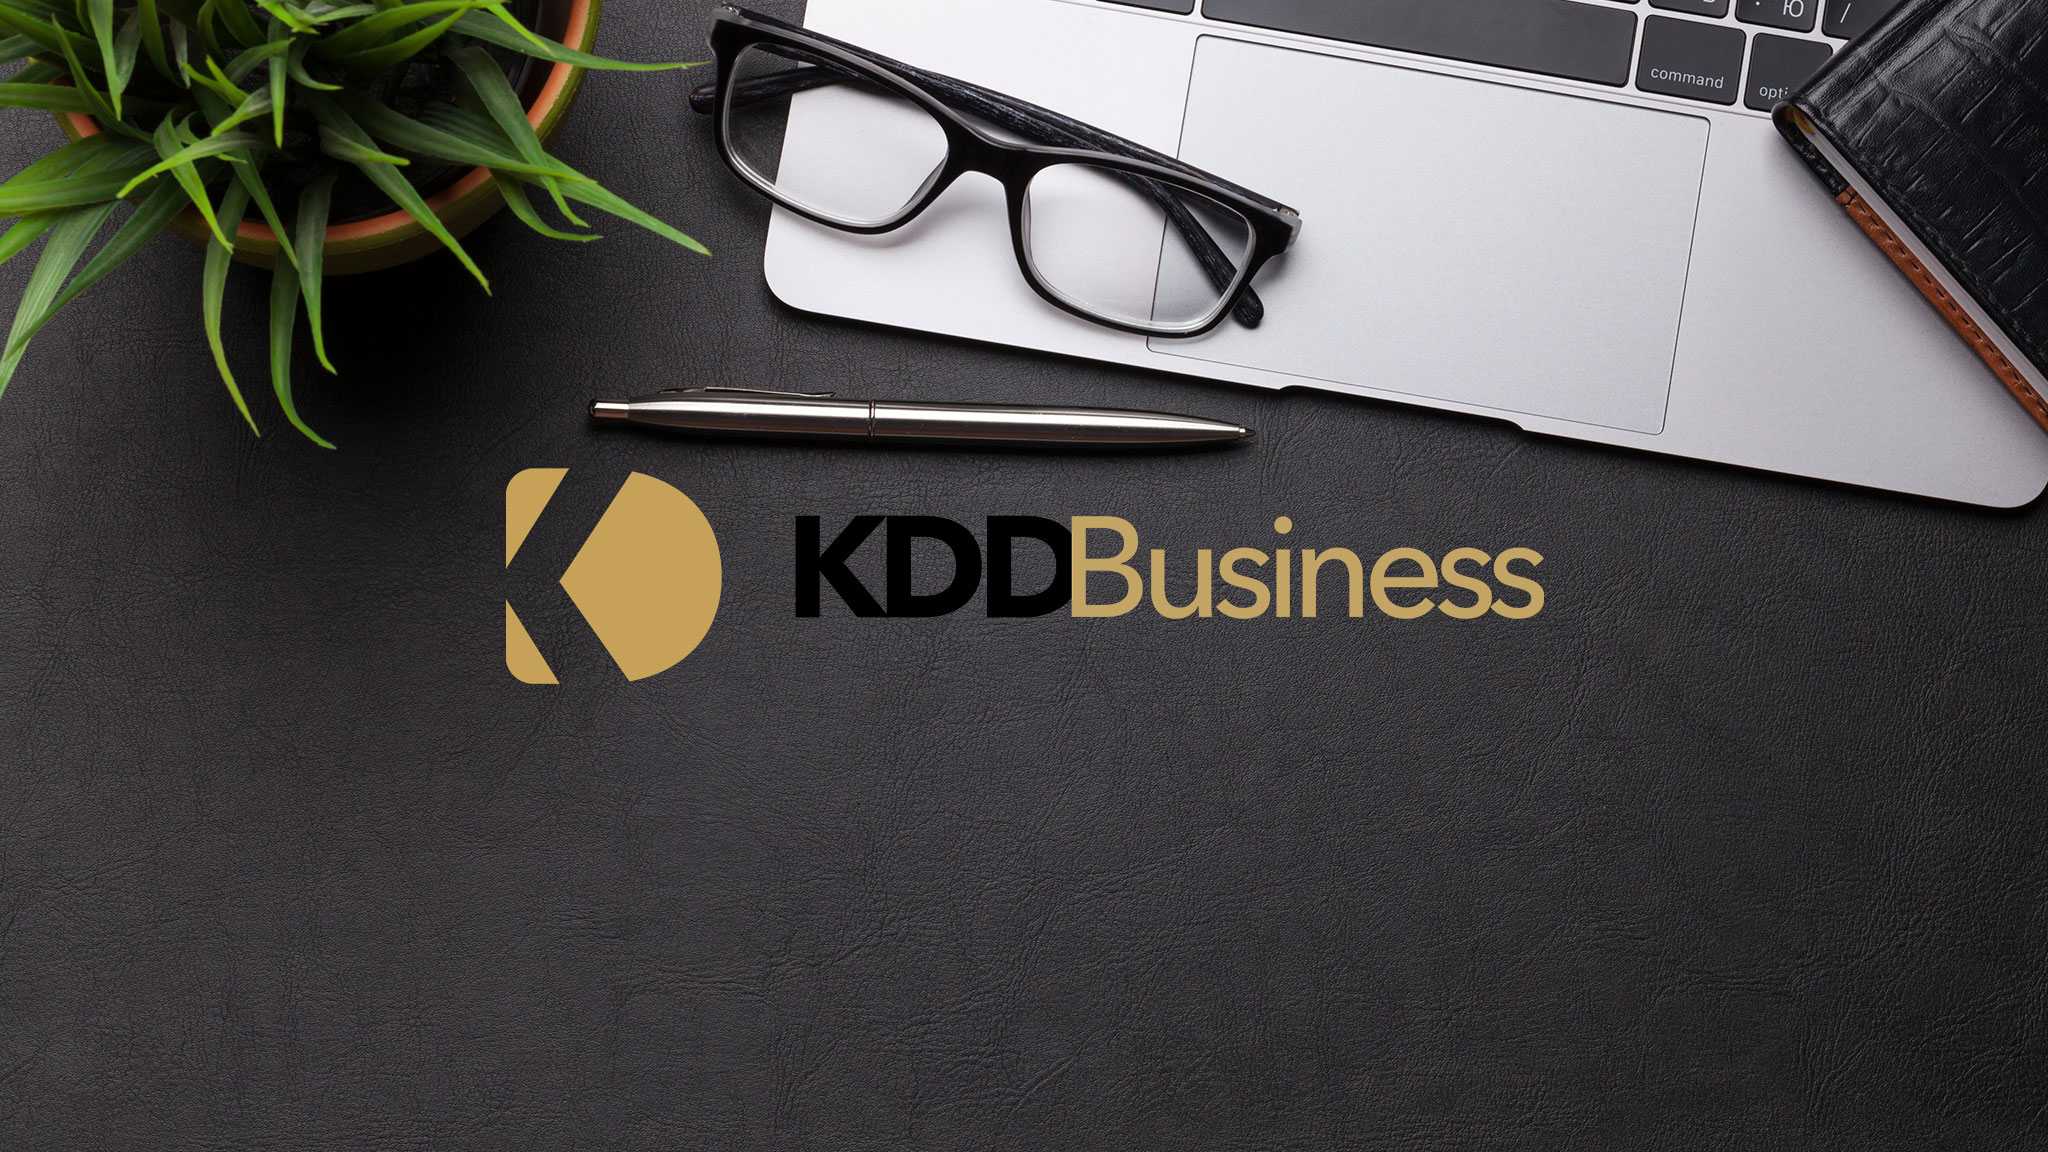 KDD Business